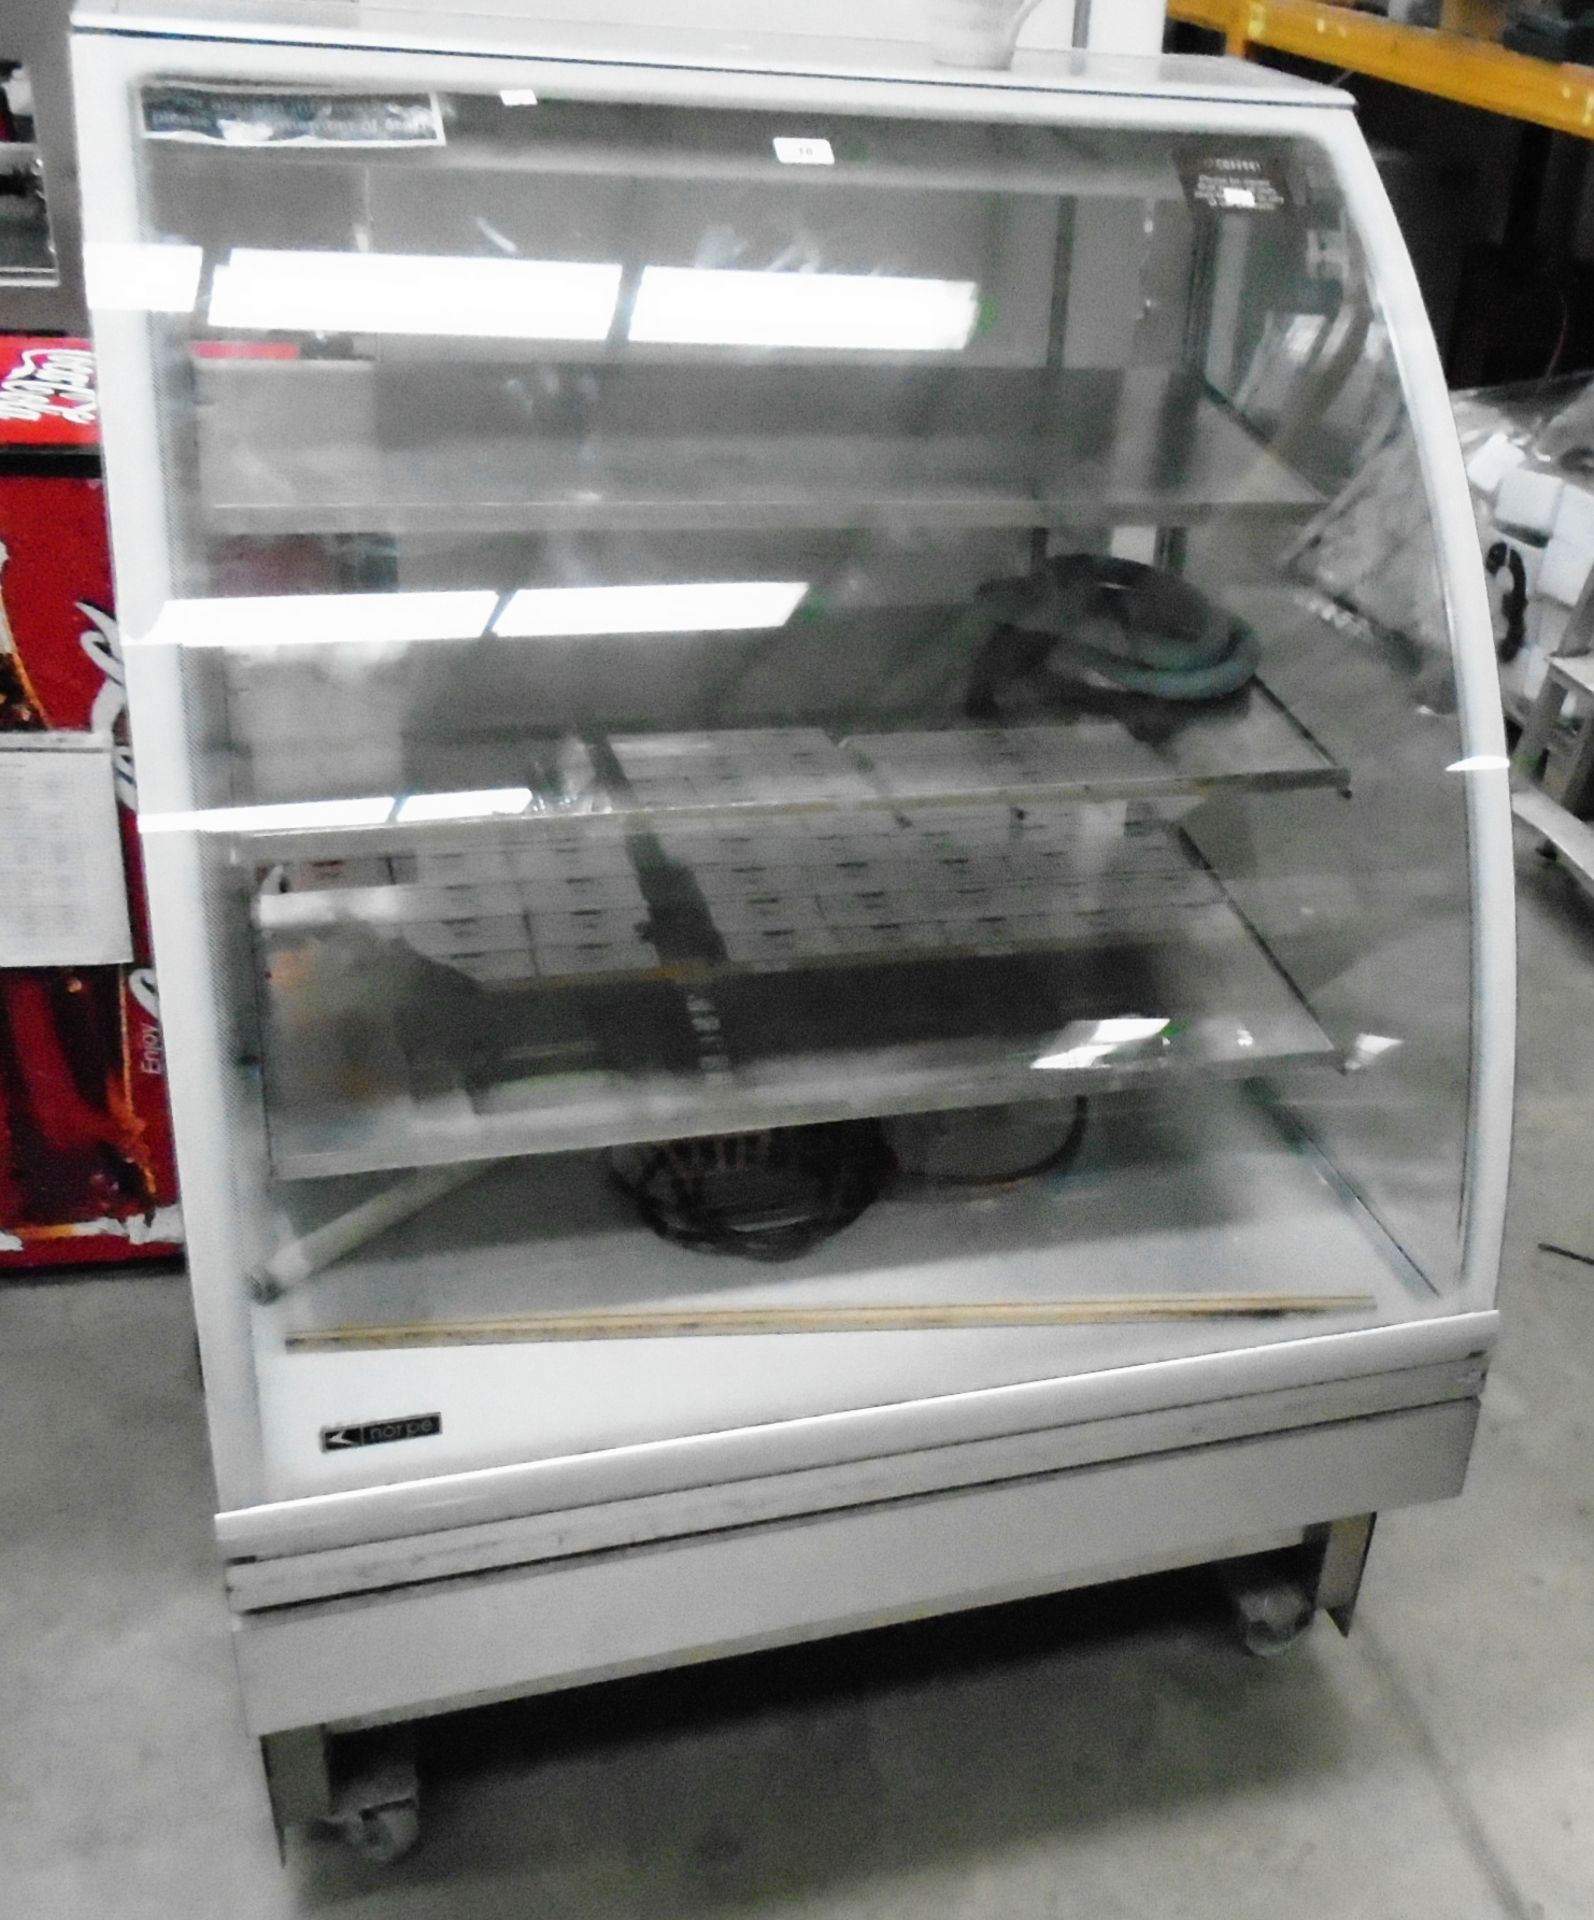 A Norpe Saga 90-W-RST curved glass front mobile food display unit - 240v